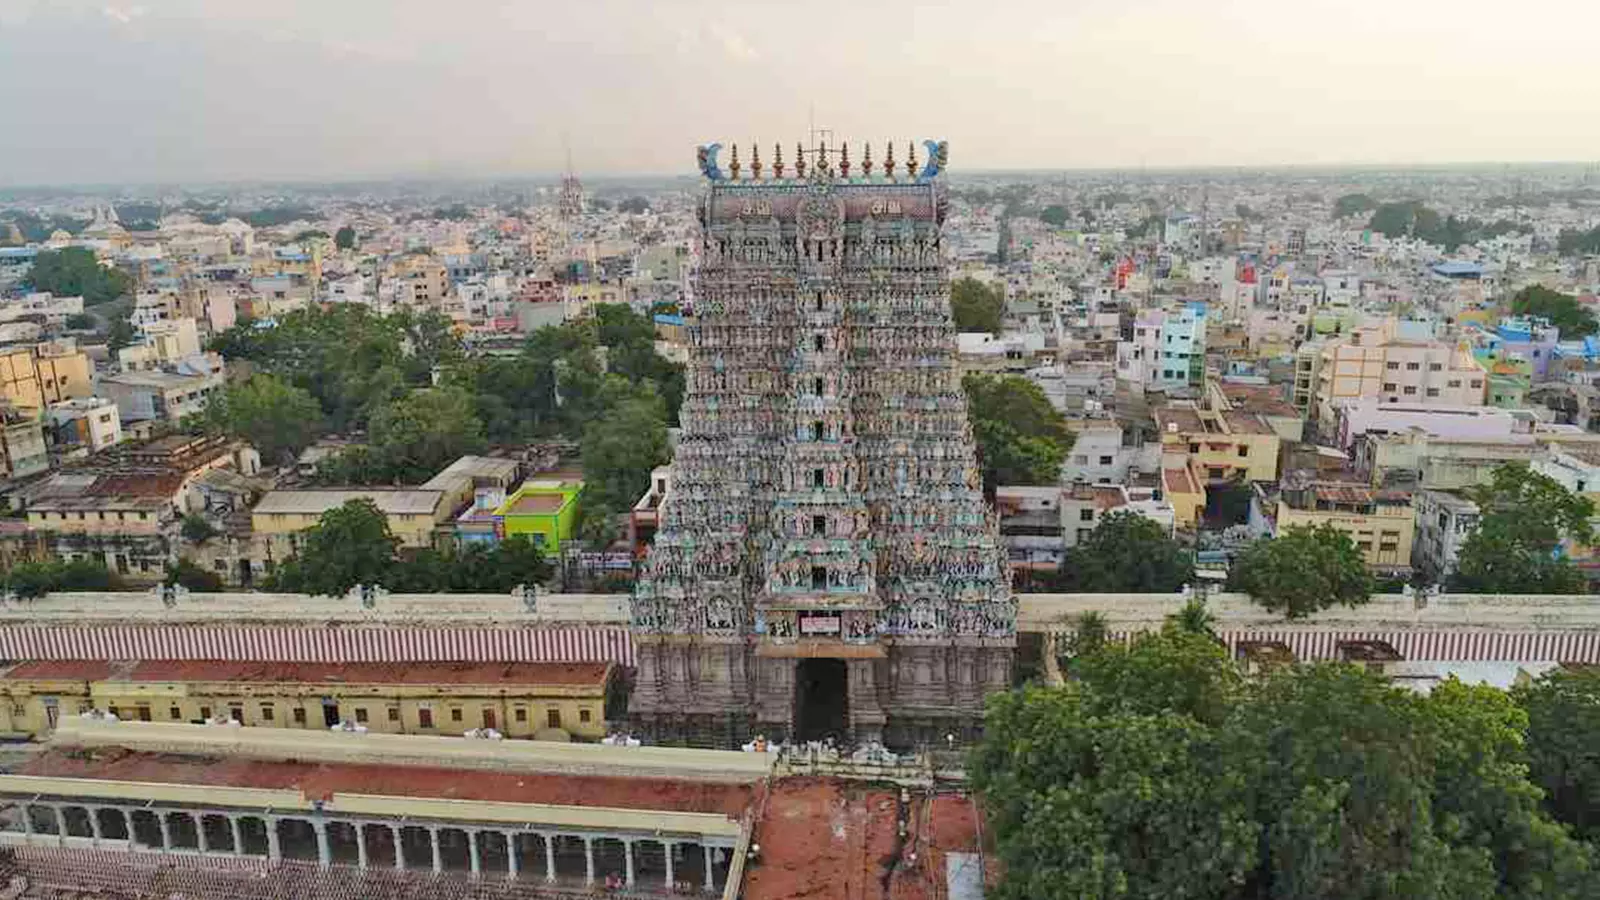 The Meenakshi Amman Temple in Madurai.